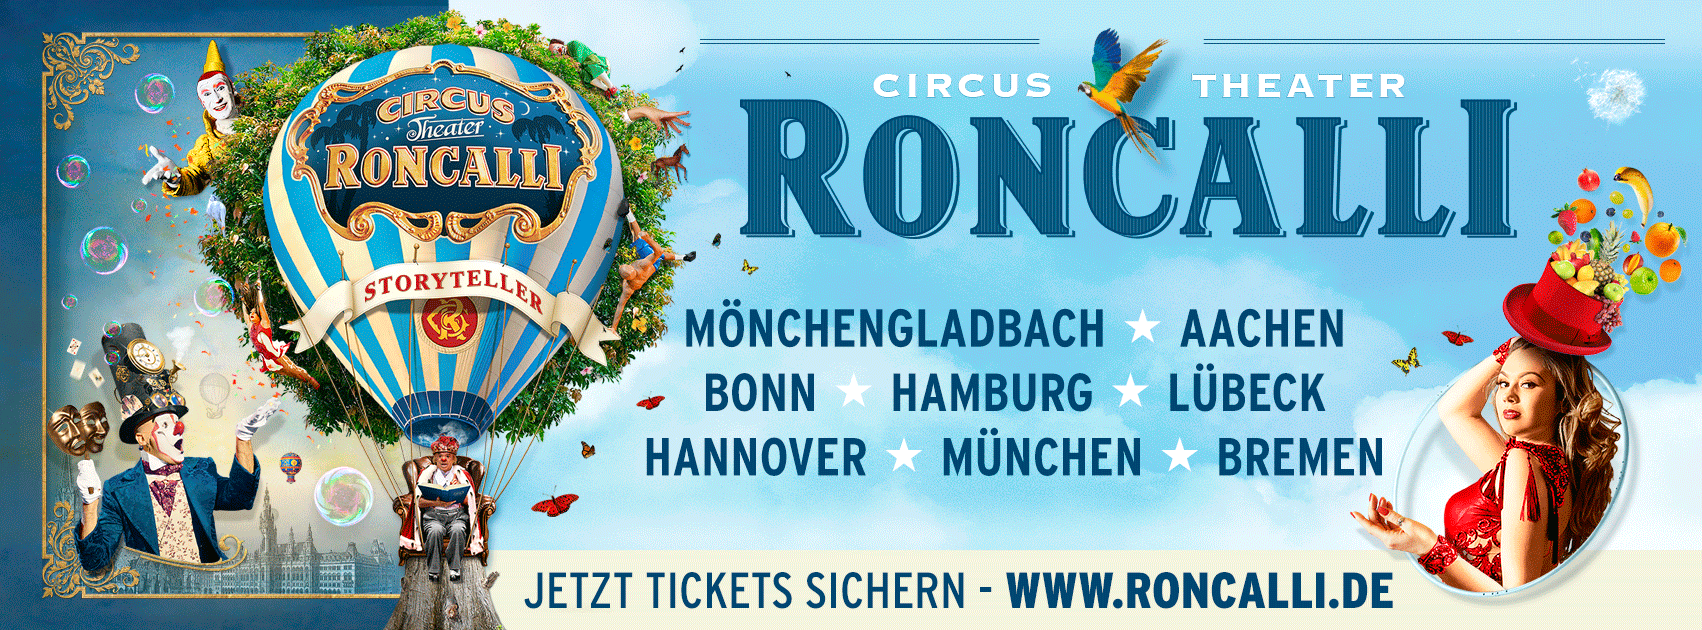 Circus Roncalli gaat 14 maart in Première